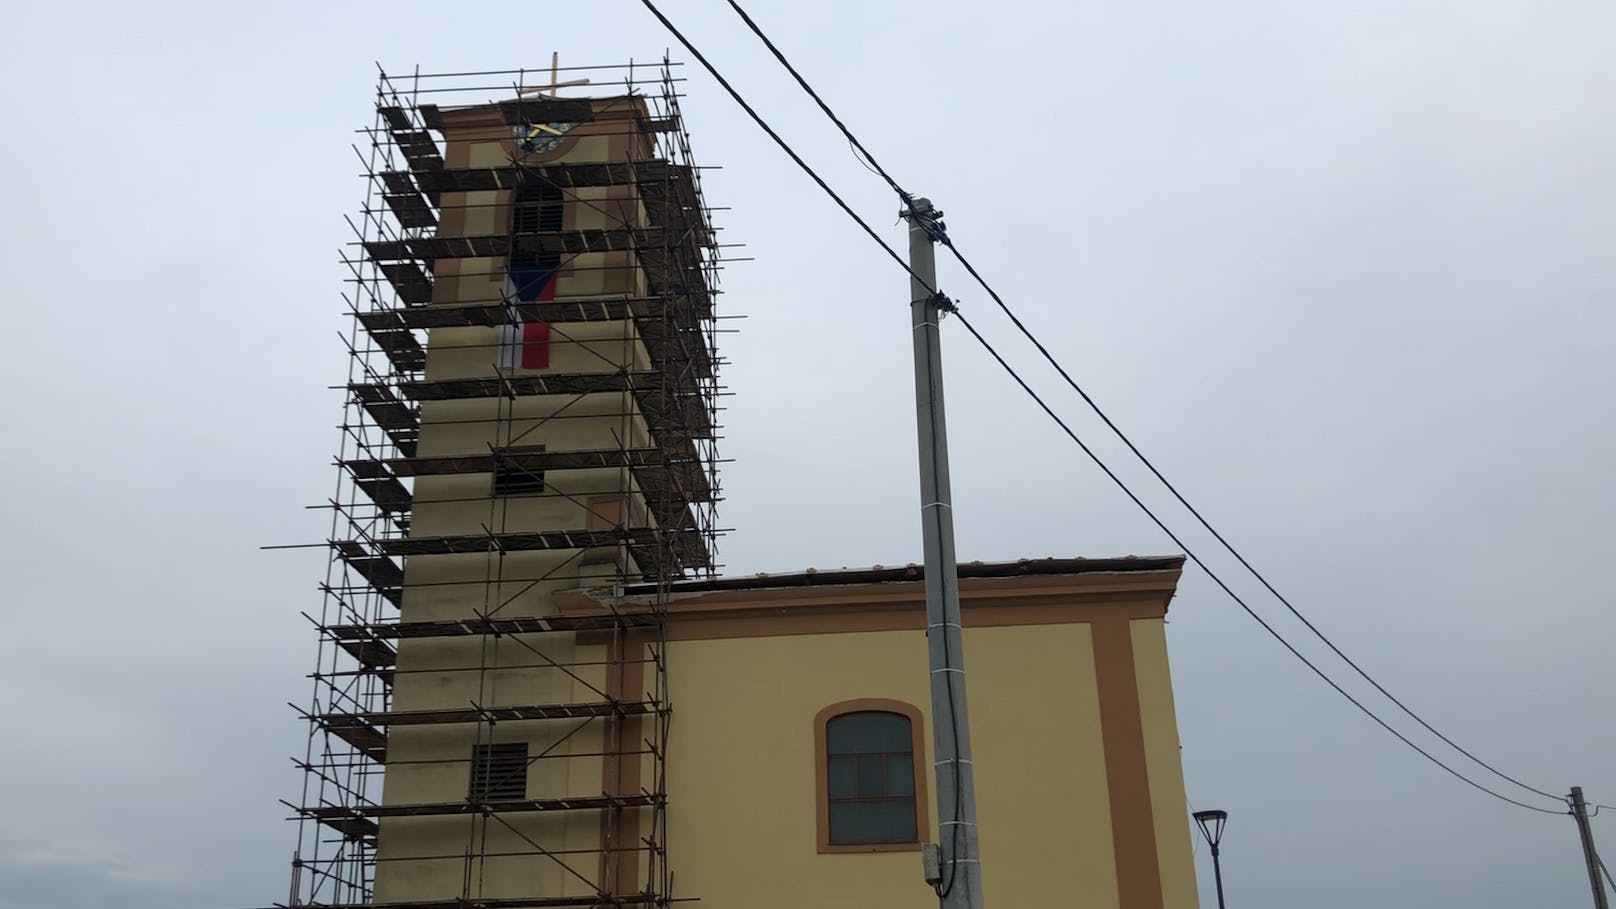 Am zerstörten Kirchturm von Moravská Nová Ves hängt die Nationalflagge.